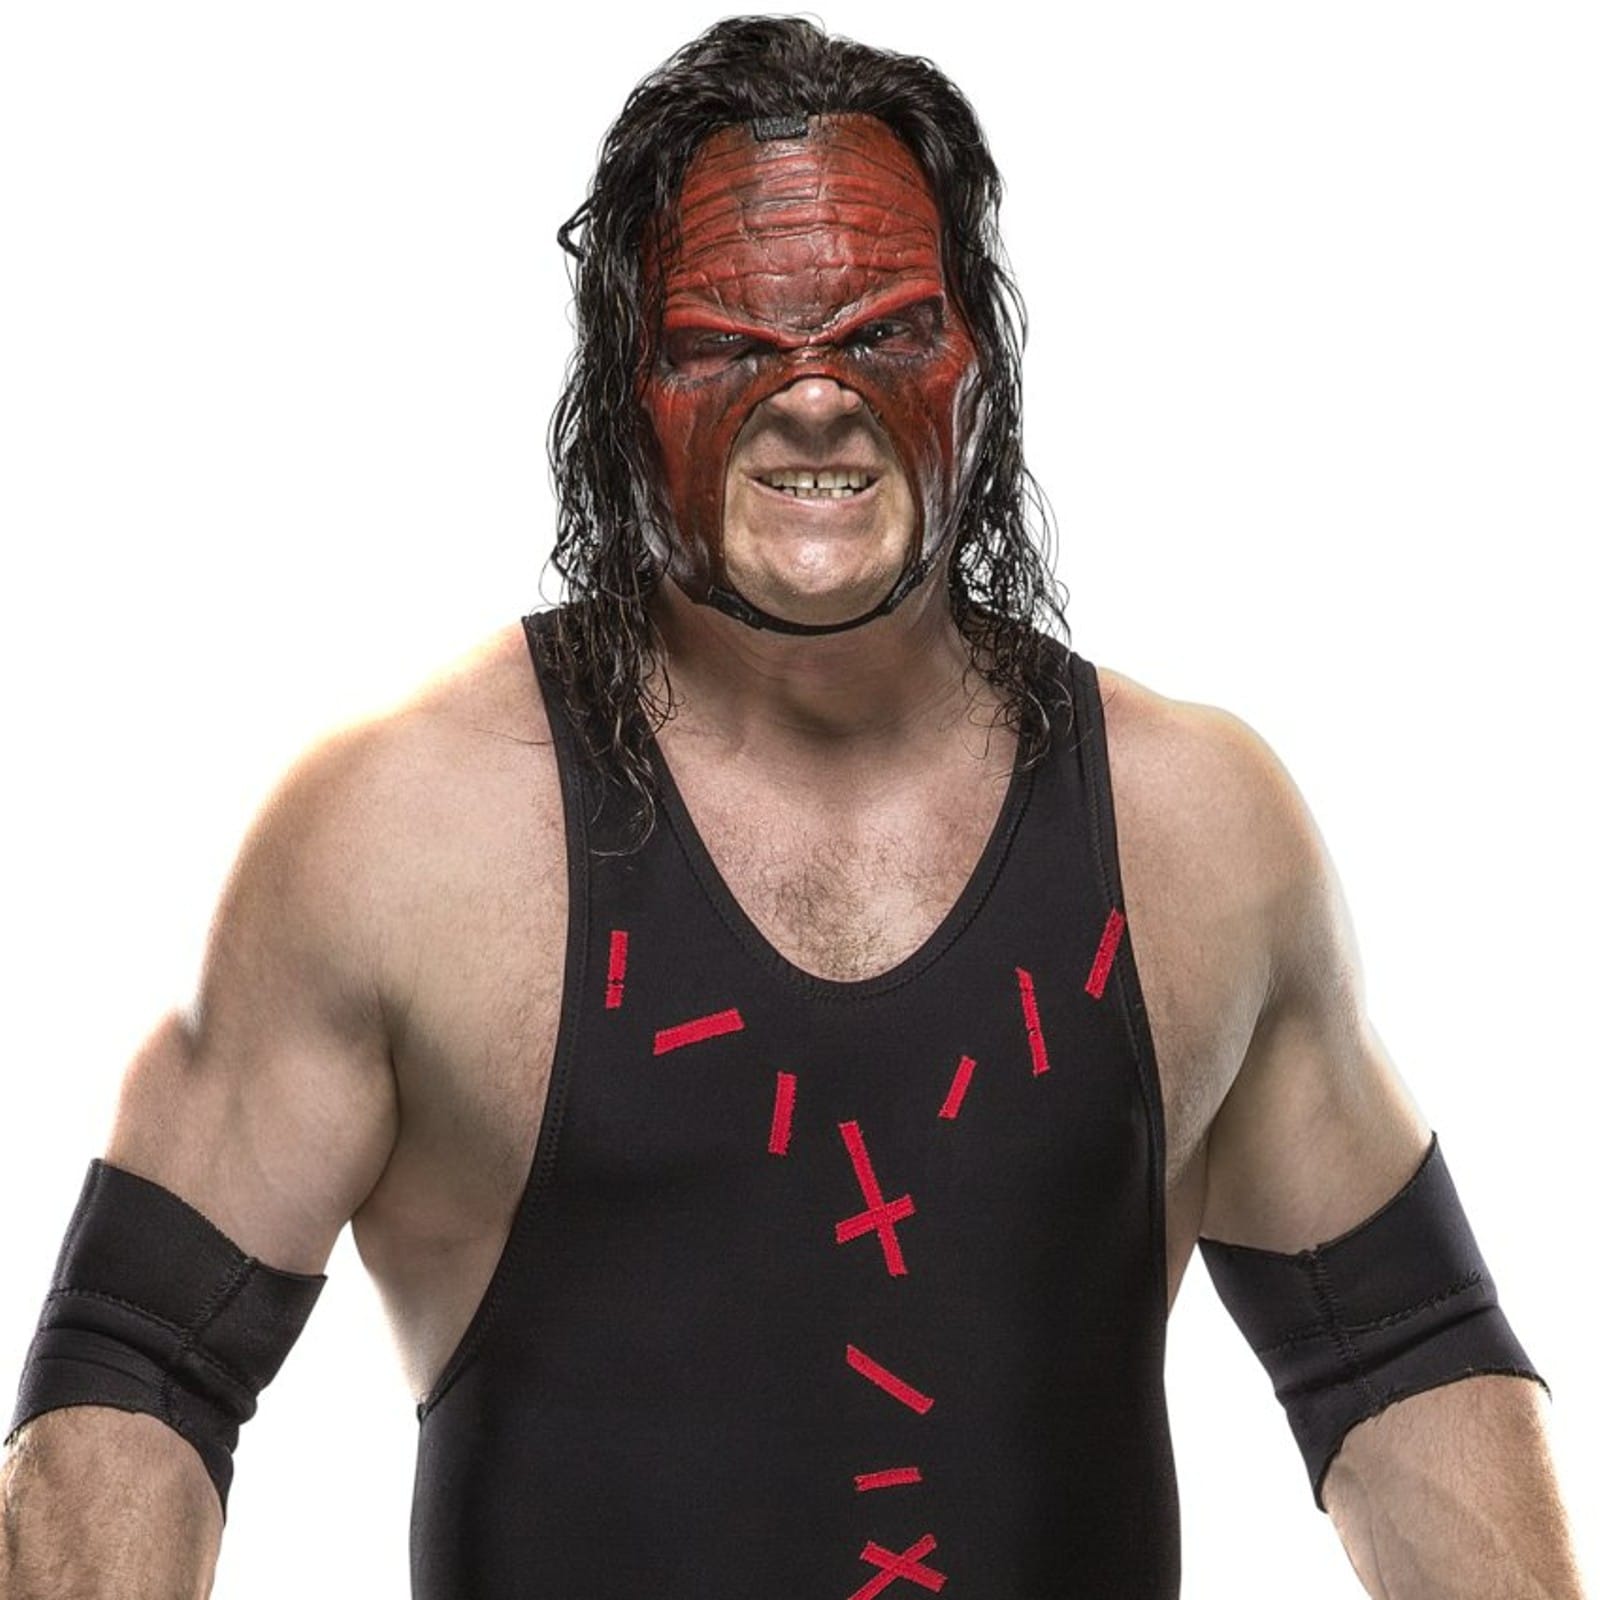 Kane wrestler  Wikipedia